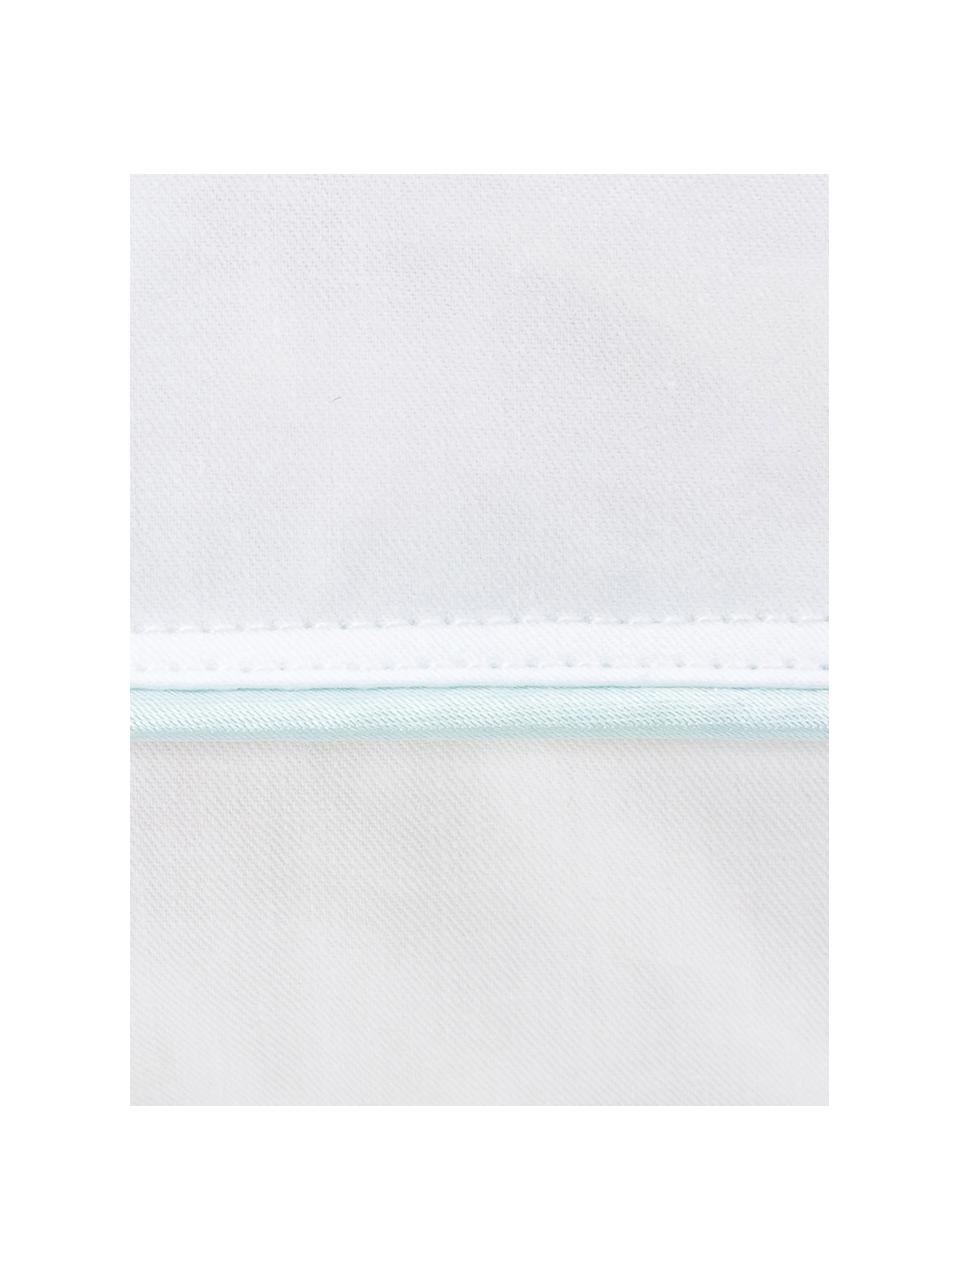 Almohada de plumas Comfort, blanda, Blanco con ribete turquesa satinado, An 45 x L 85 cm